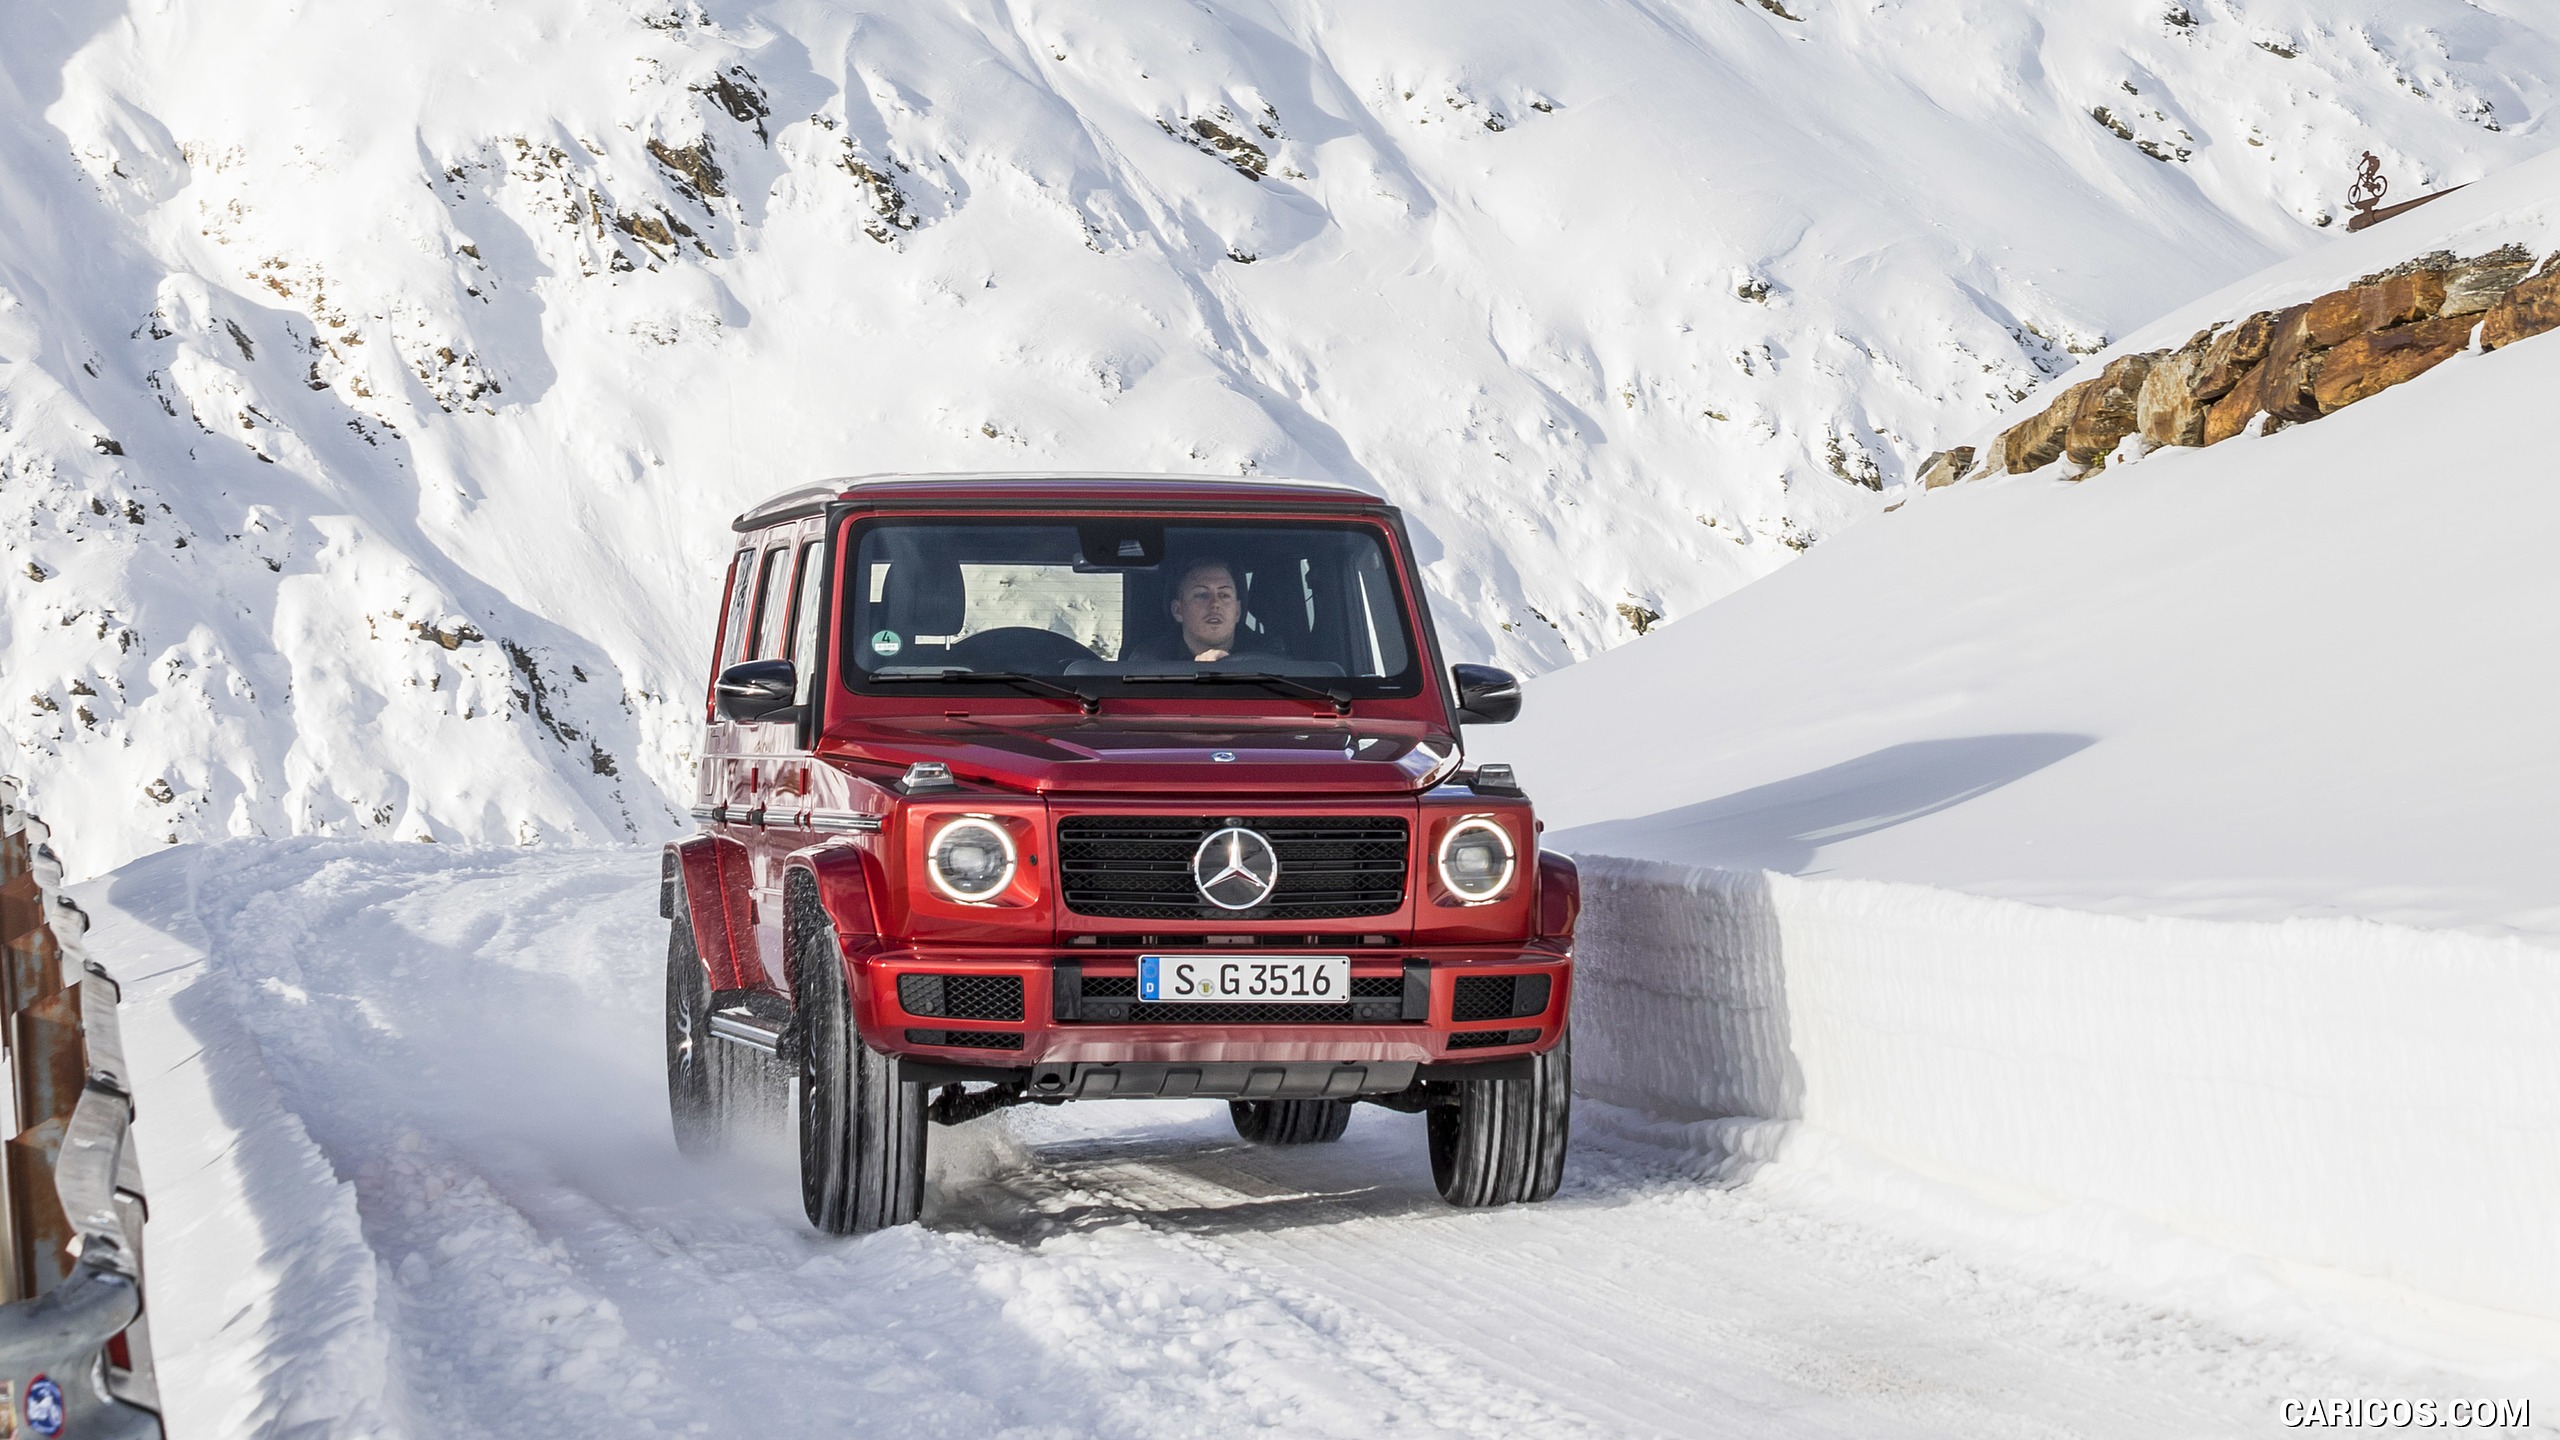 2019 Mercedes-Benz G 350 d (Designo Hyazinth Red Metallic) - In Snow - Front, #7 of 51